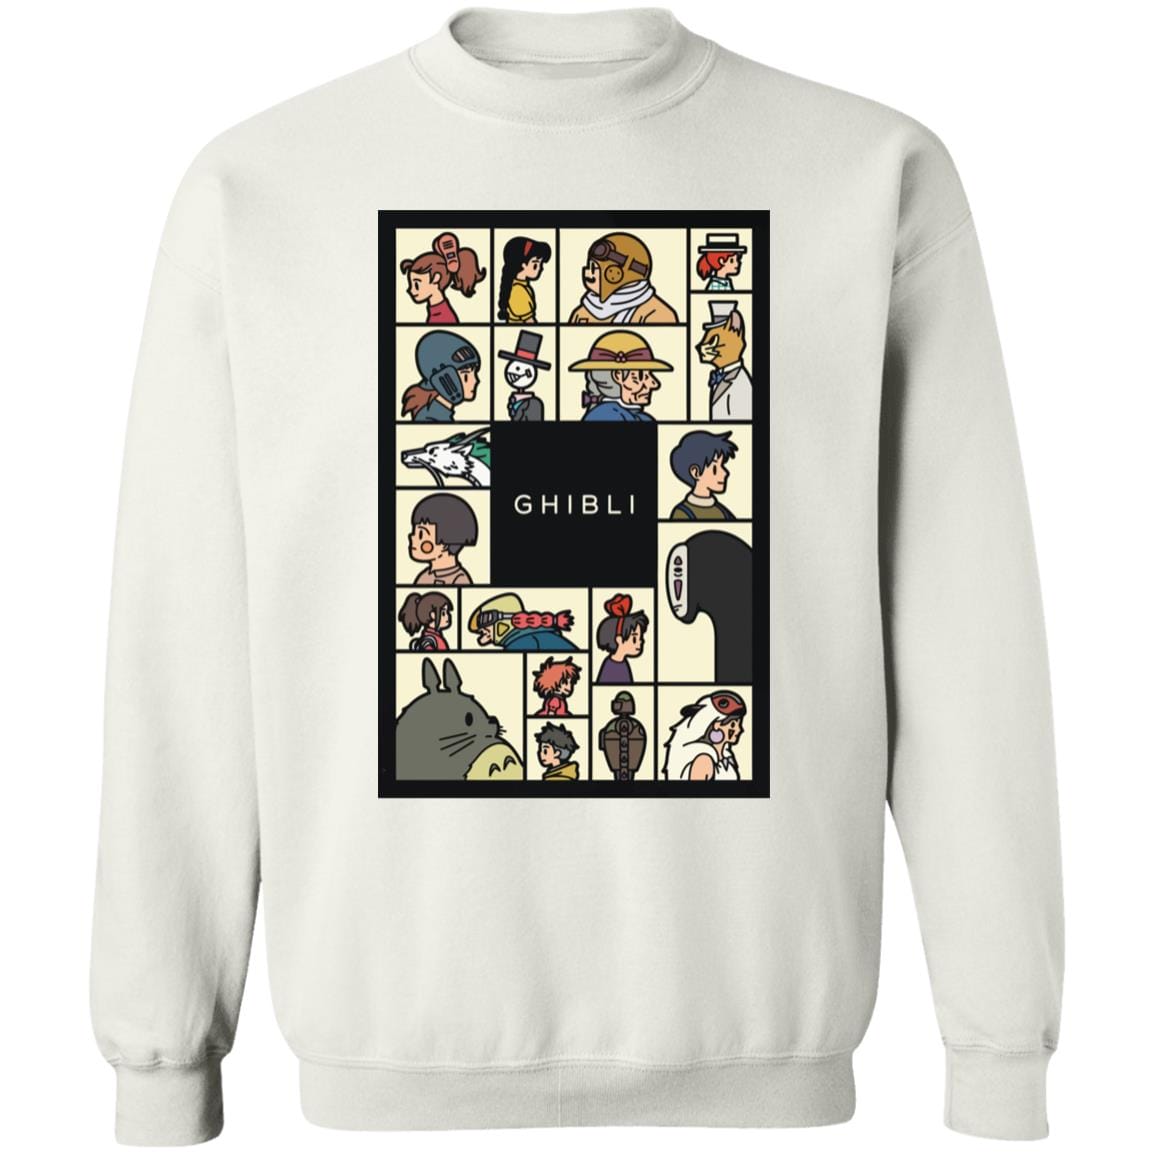 Studio Ghibli Merchandise & T-shirts, Hoodies